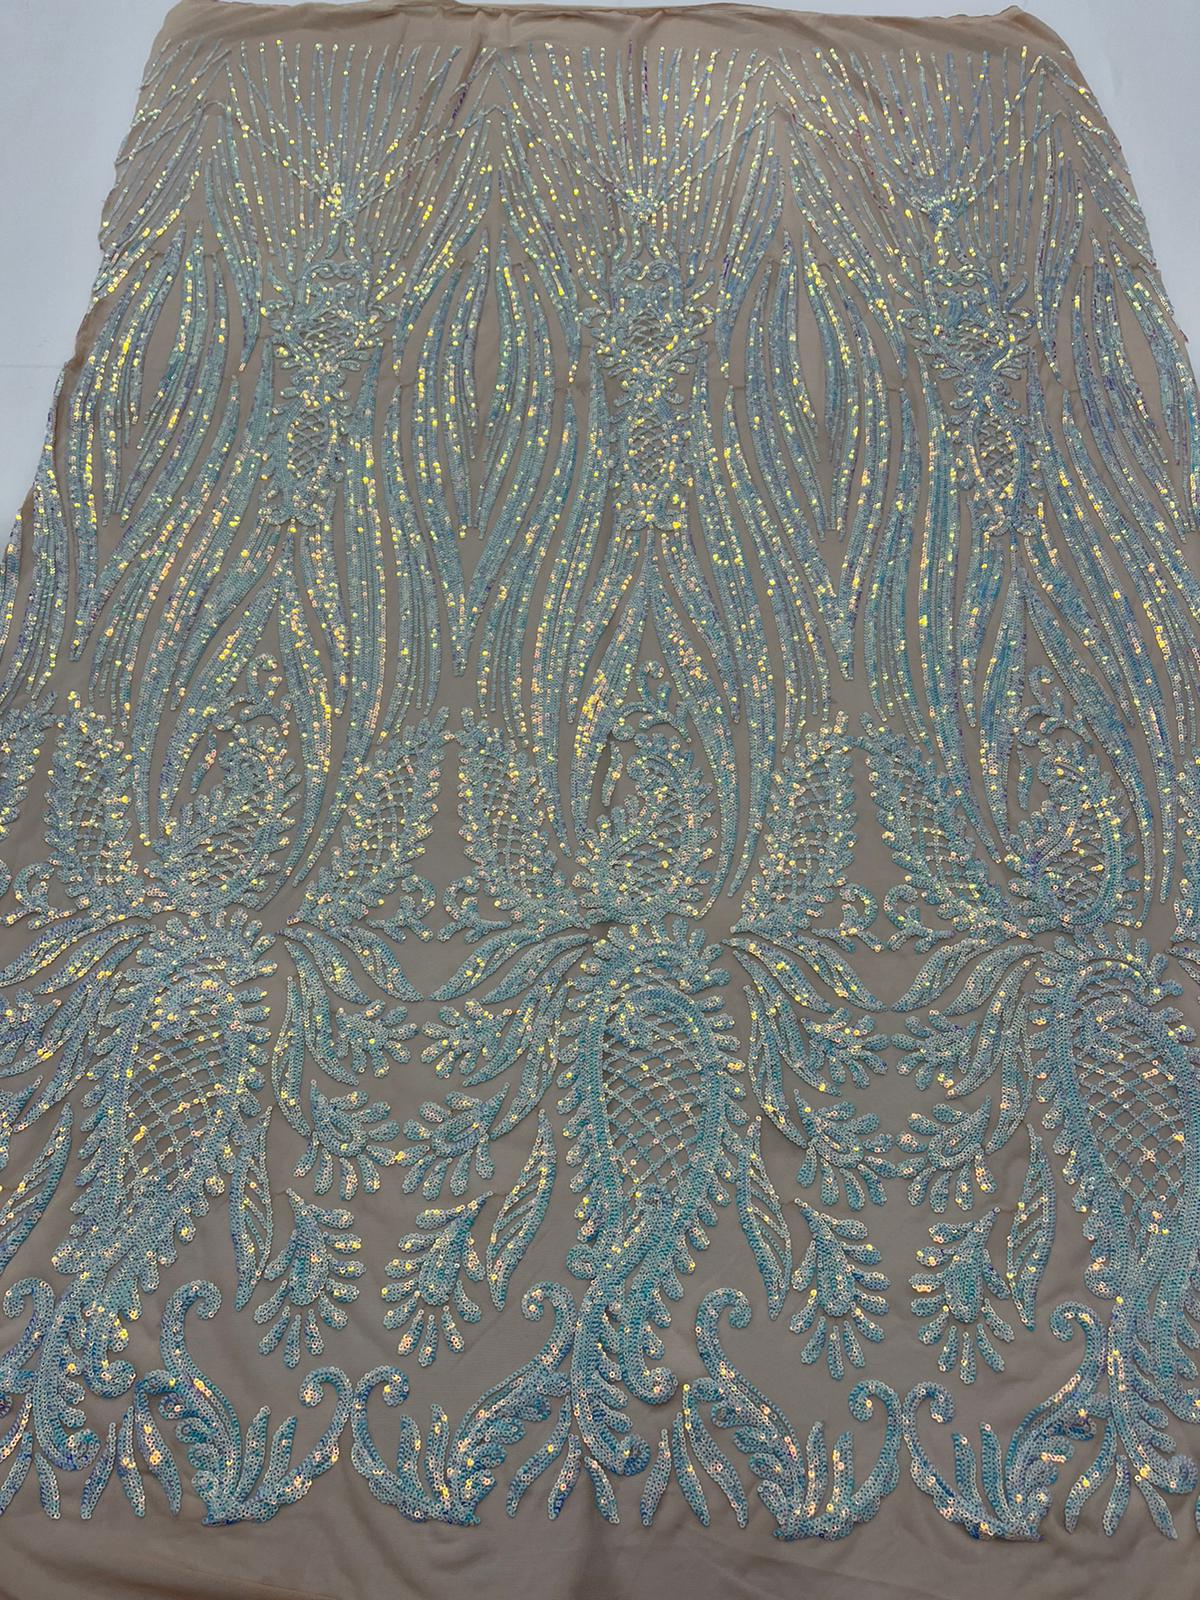 Geometric 4 Way Stretch Sequin Fabric | Baby Blue | Embroidered FabricICE FABRICSICE FABRICSSample (Swatch)Geometric 4 Way Stretch Sequin Fabric | Baby Blue | Embroidered Fabric ICE FABRICS